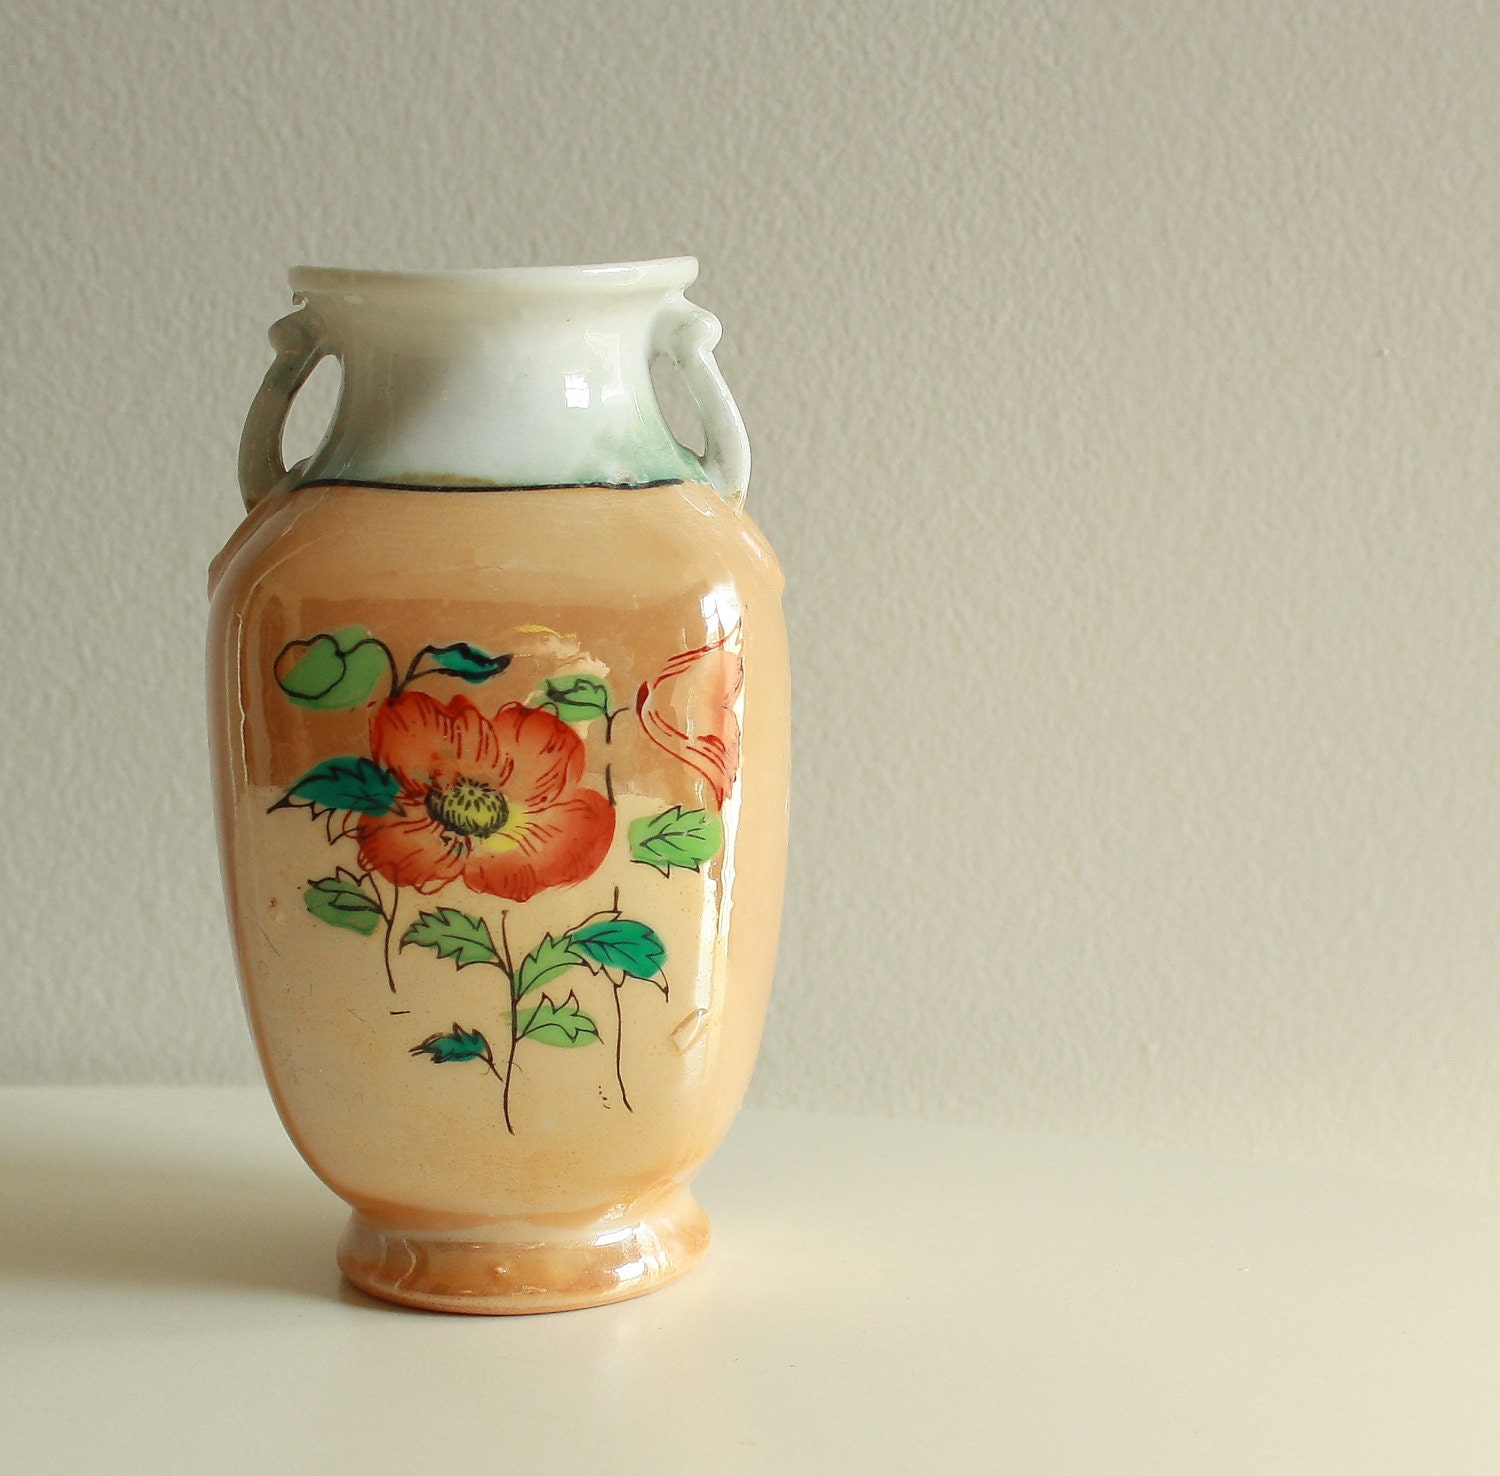 Antique Handpainted Vase. Vintage Asian Vase. Small Ceramic Vase. Asian Home Decor. Vintage Decorative Vase with Poppies - KLizVintage